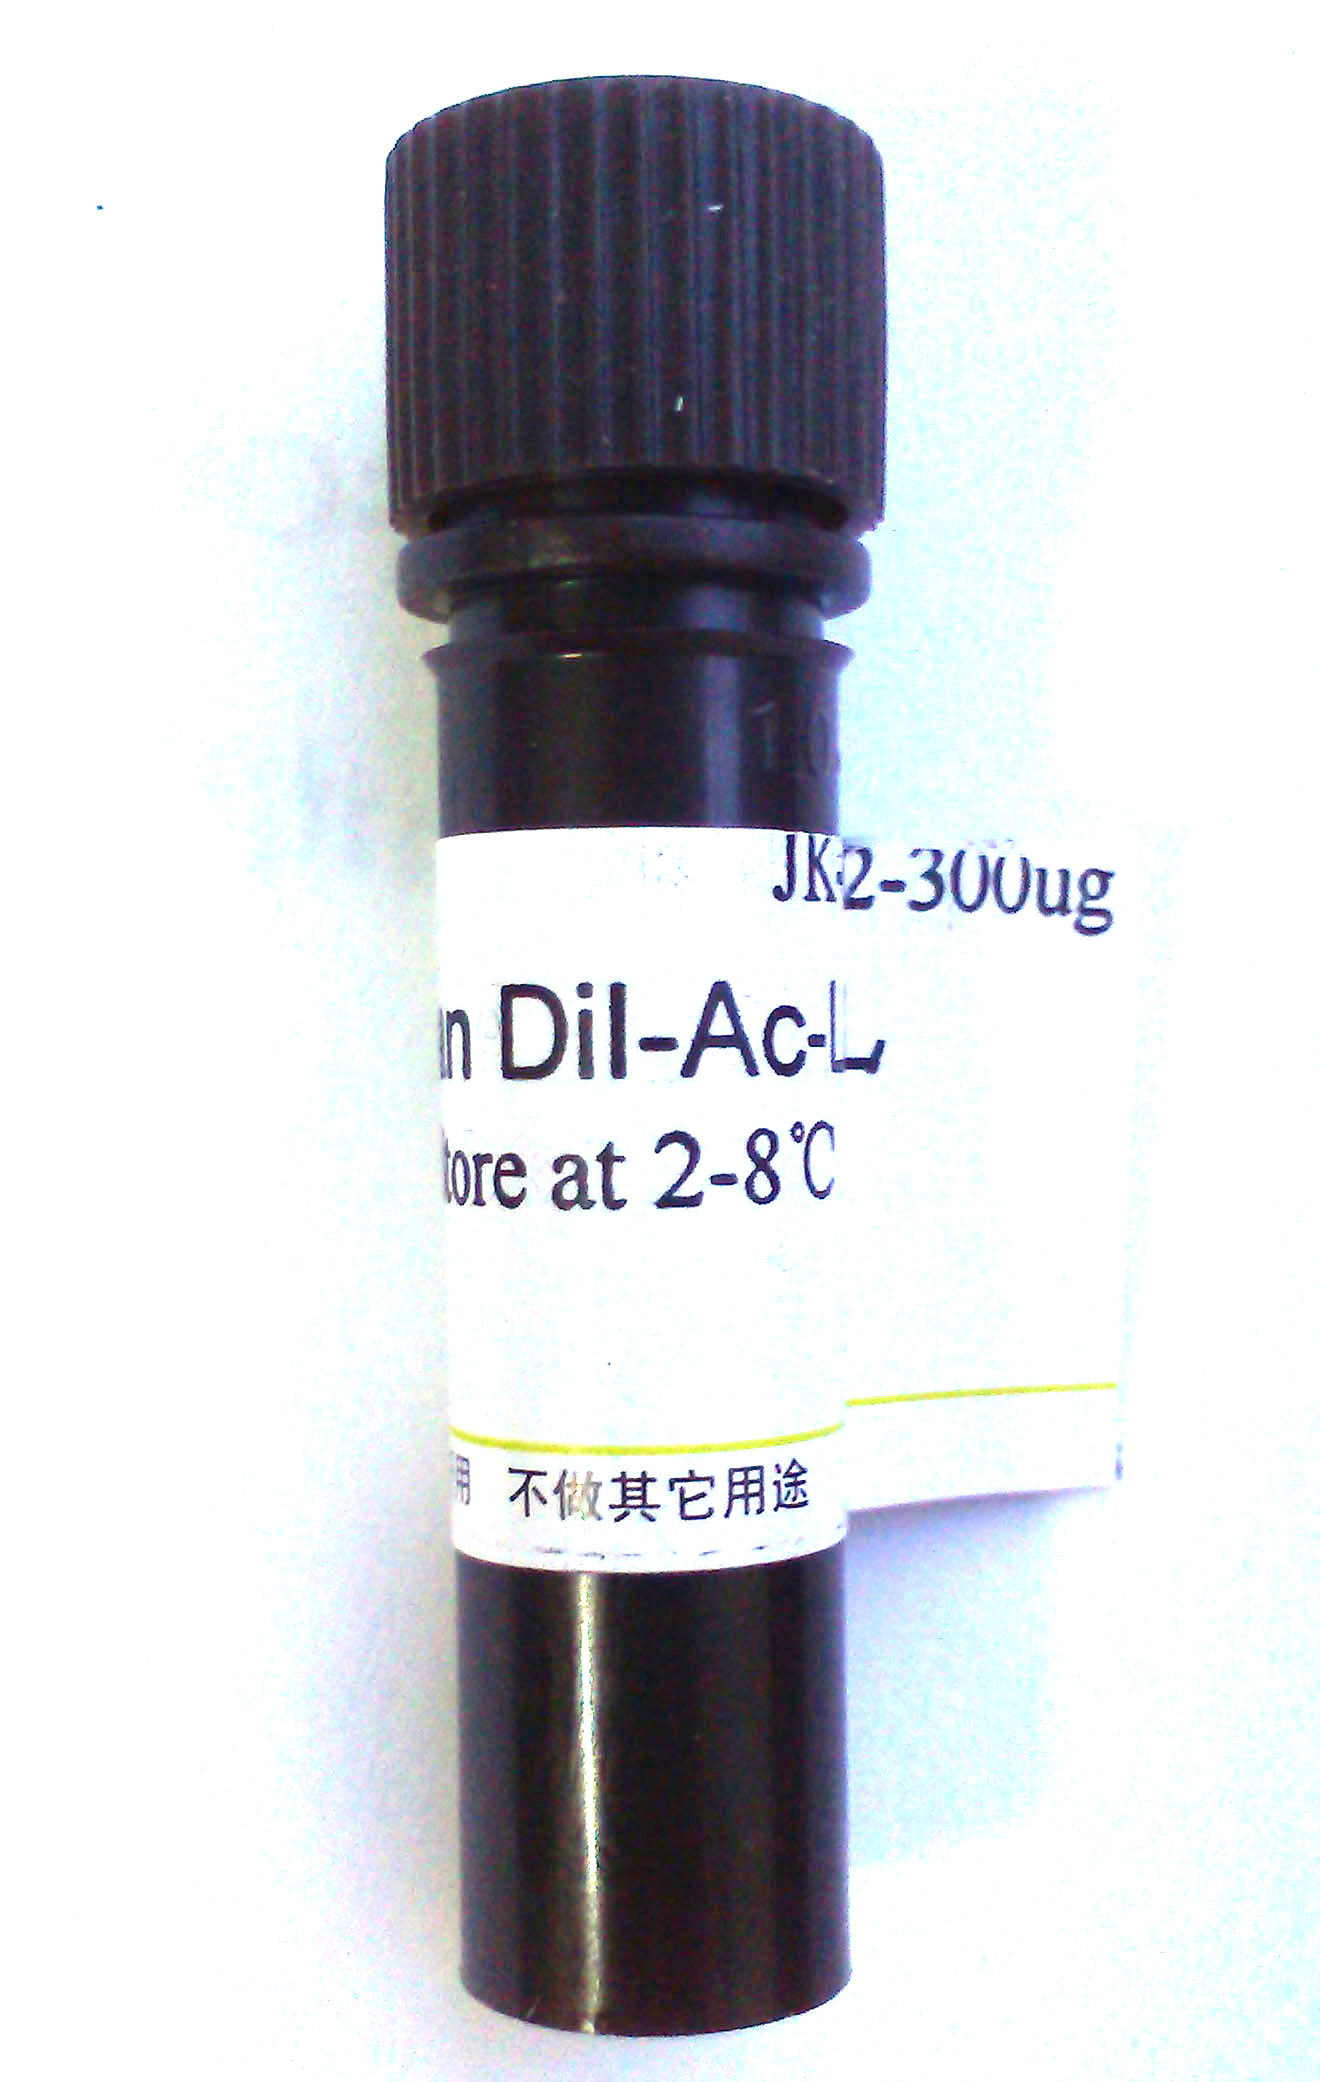 DiI标记乙酰化低密度脂蛋白 DiI-Ac-LDL